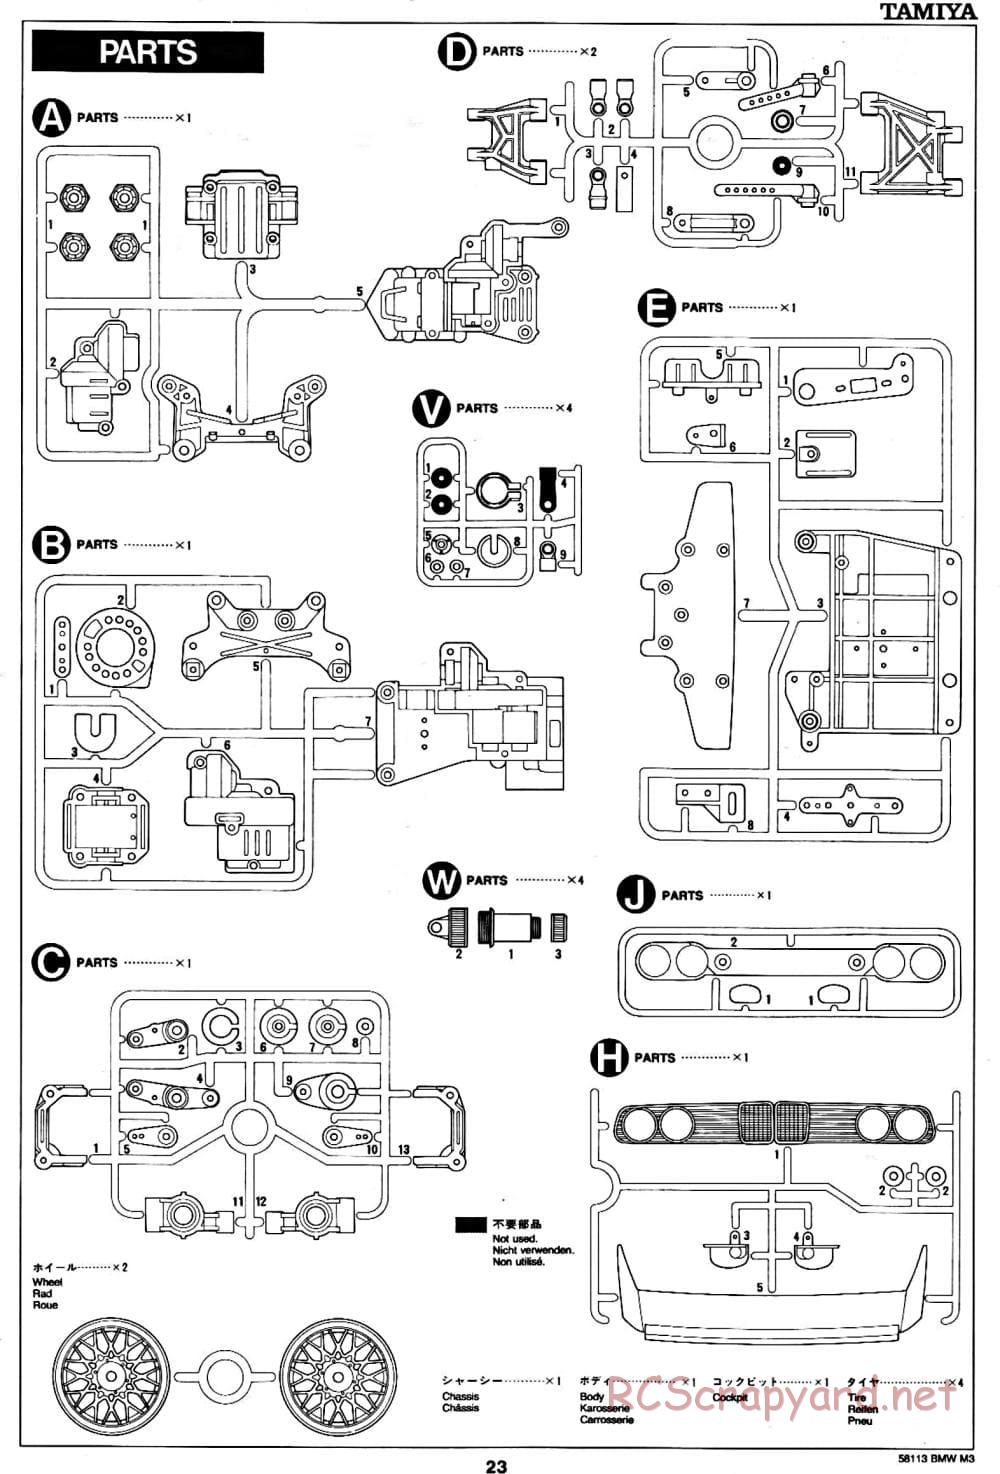 Tamiya - Schnitzer BMW M3 Sport Evo - TA-01 Chassis - Manual - Page 23